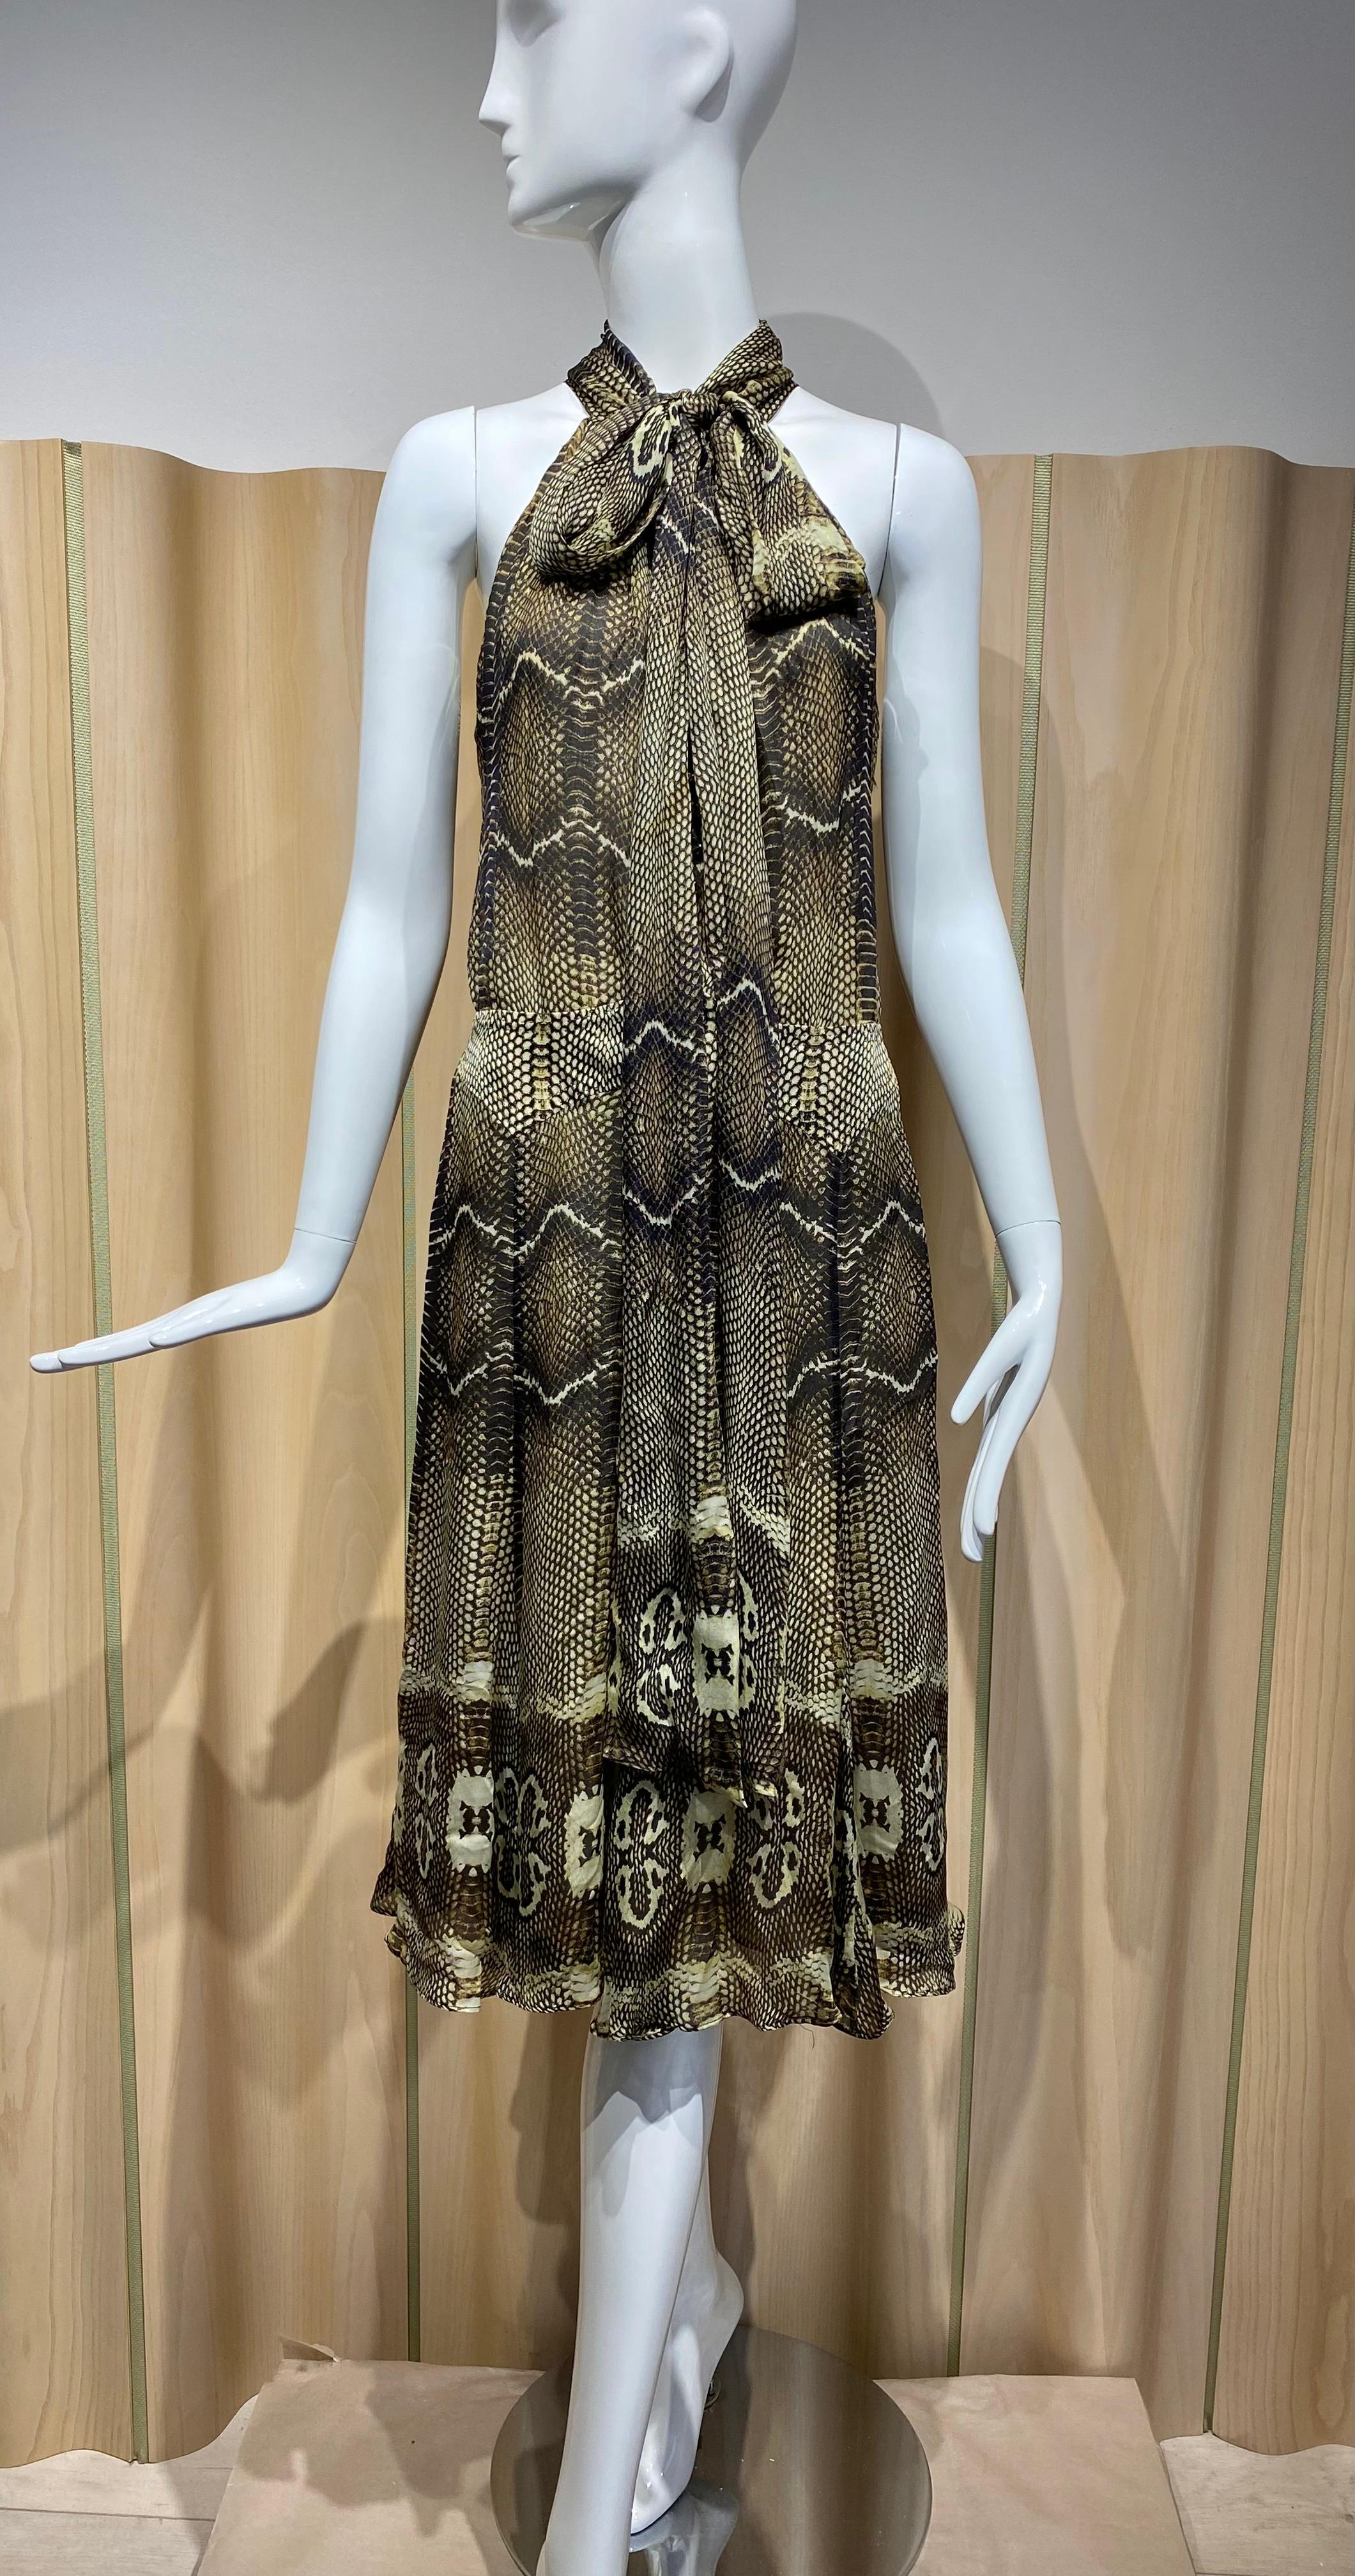 2000s Roberto Cavalli Silk Chiffon snake skin print sleeveless  knee length dress with long sash on collar.
fit size medium
